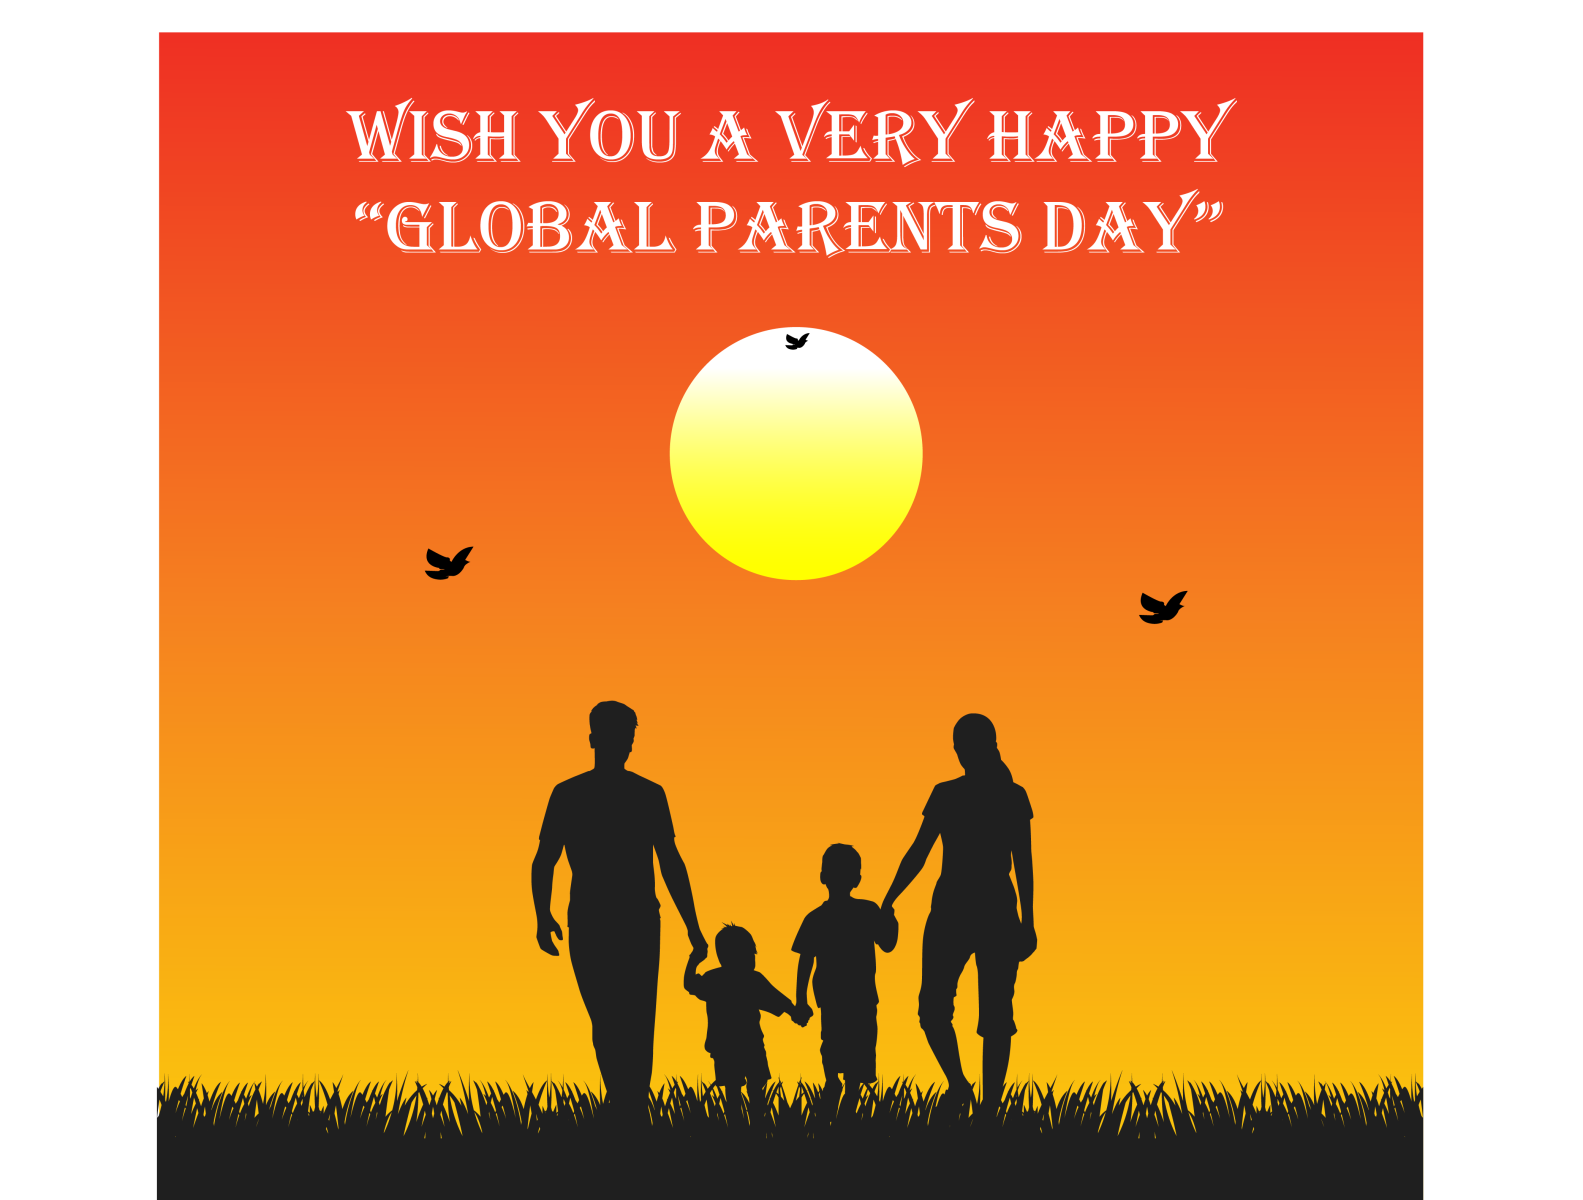 Global Parents Day Poster Design. by divya tewari on Dribbble